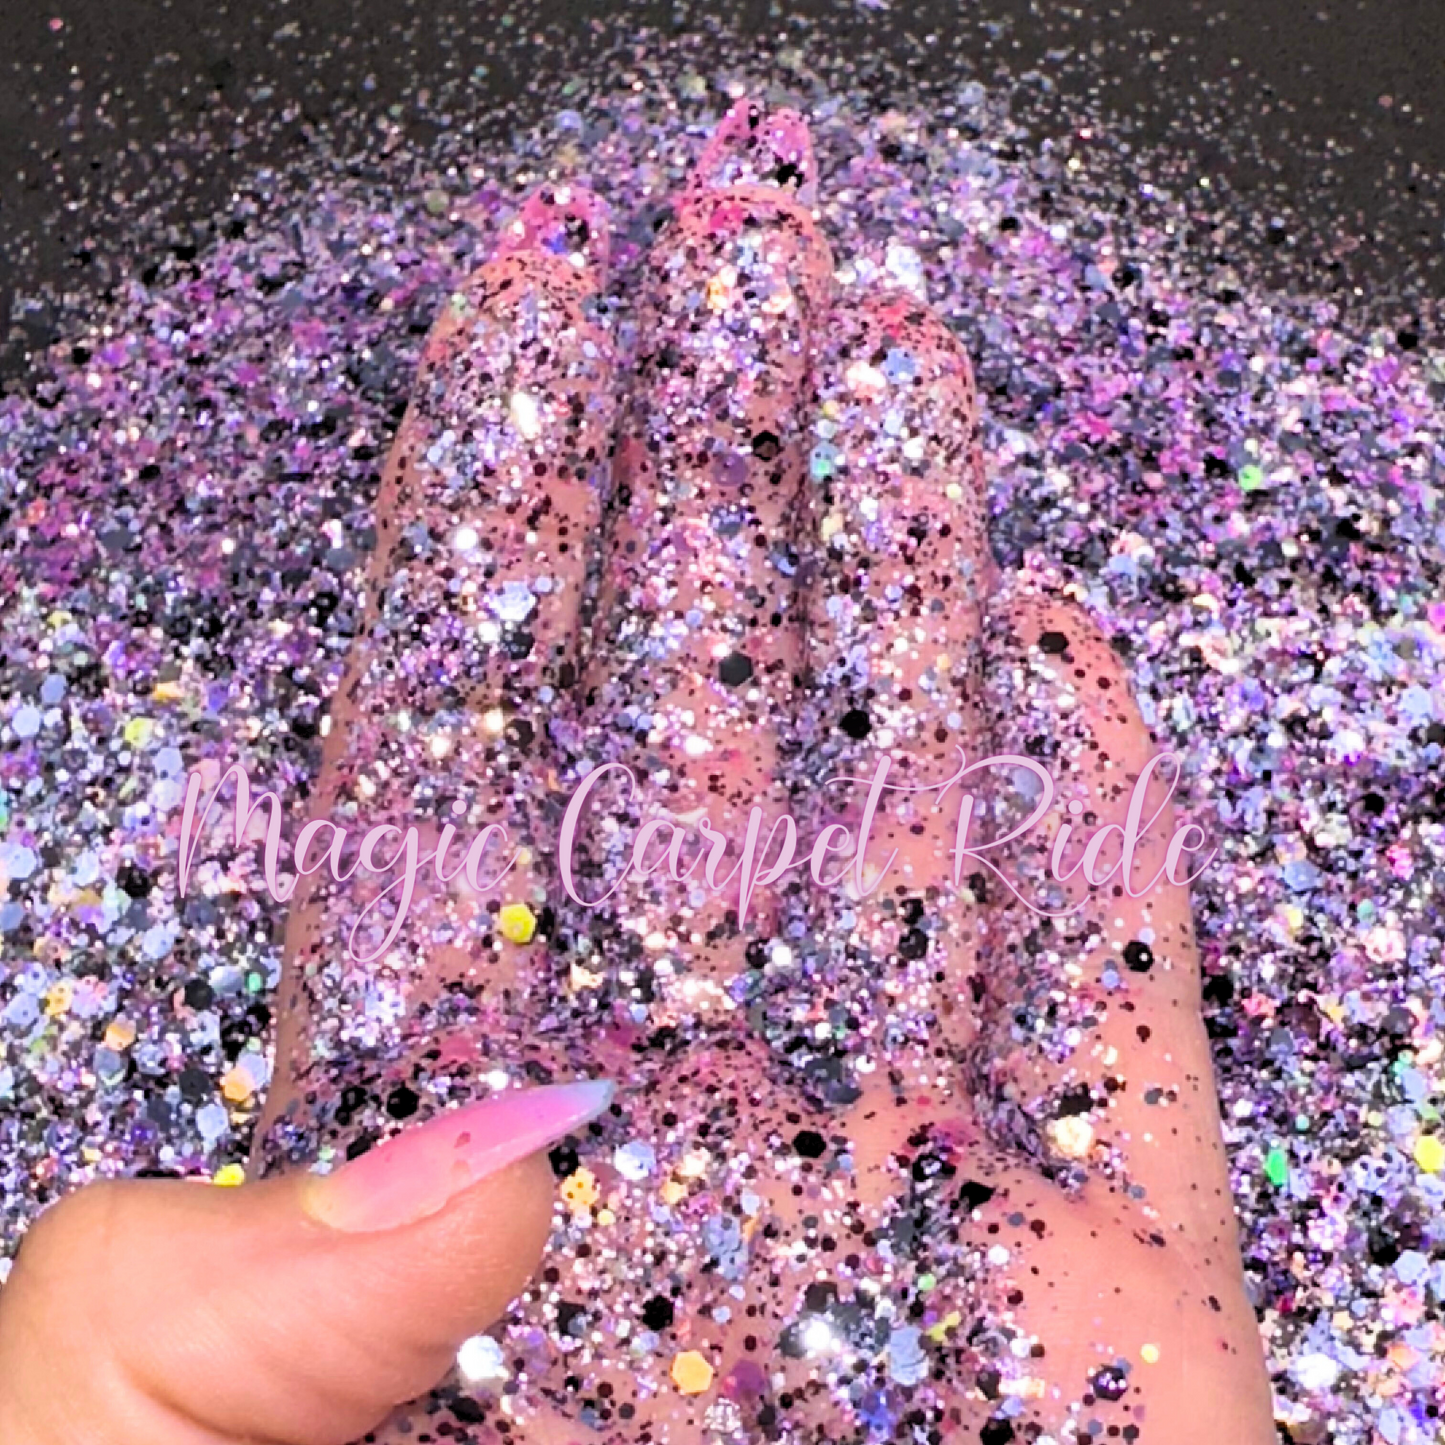 Magic Carpet Ride Chunky Glitter Mix